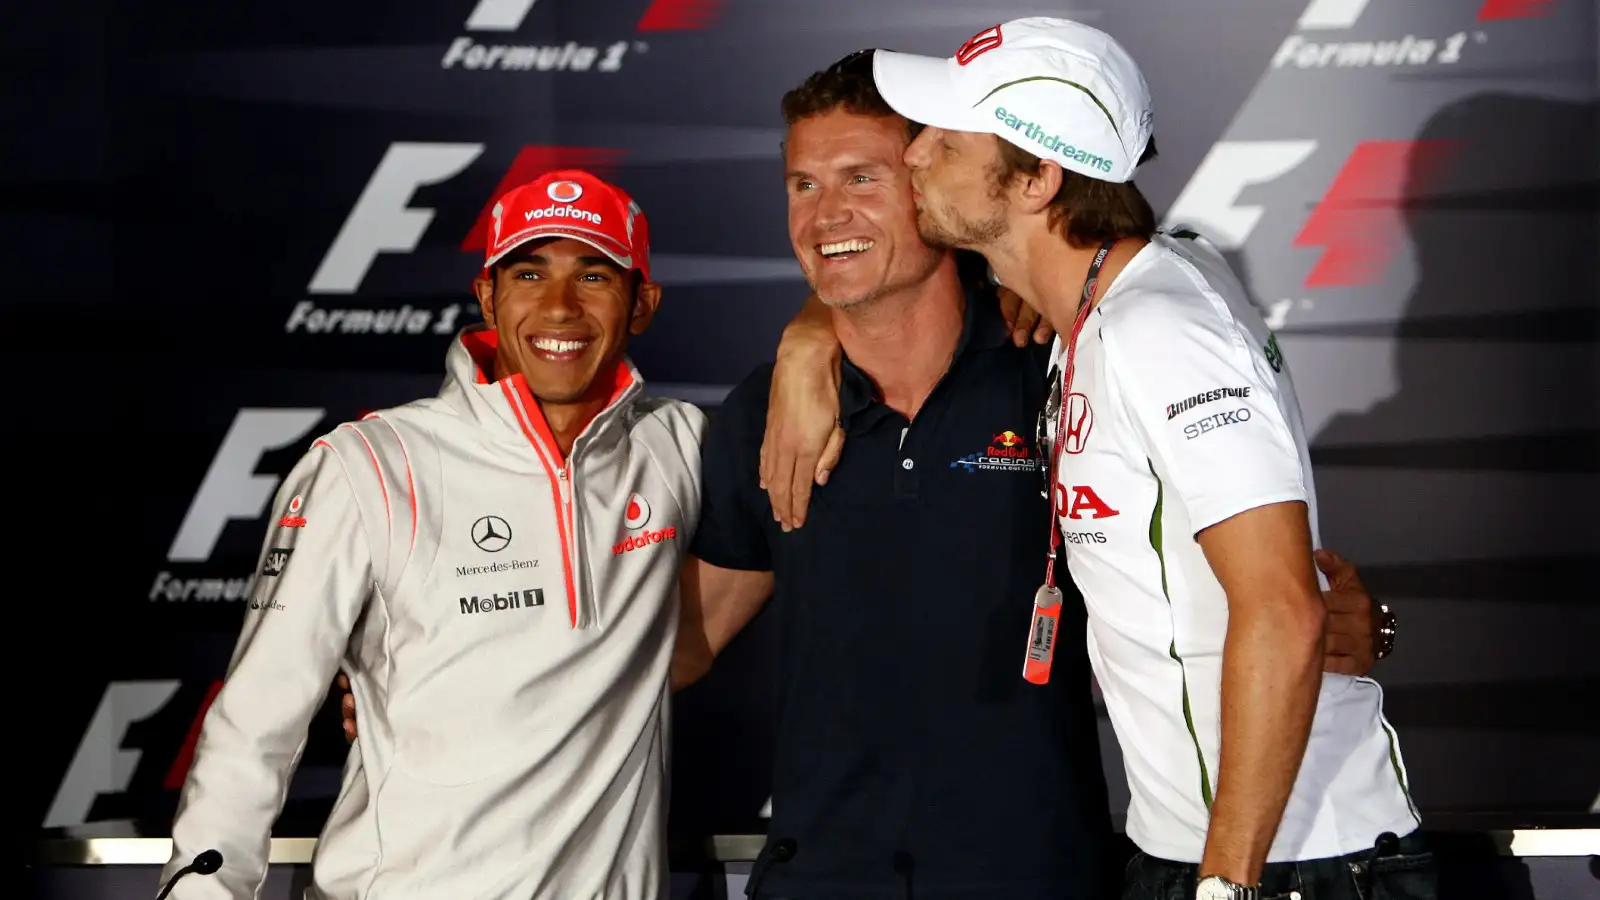 David Coulthard, Lewis Hamilton, and Jenson Button at the 2008 Brazilian Grand Prix.